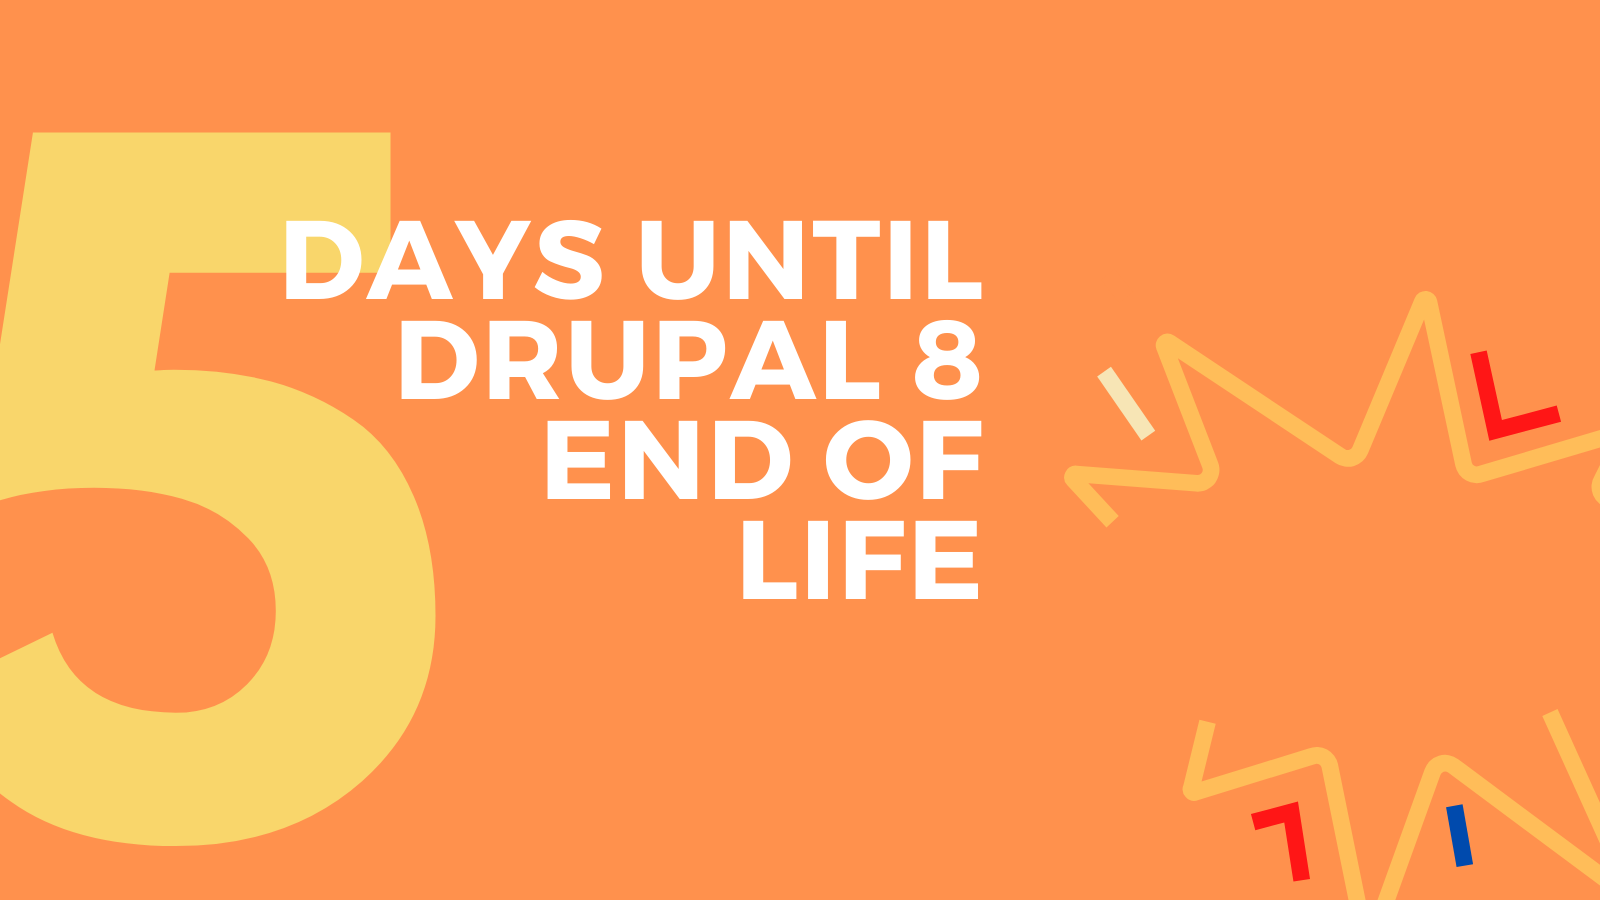 Five days to go until Drupal 8 End of Life